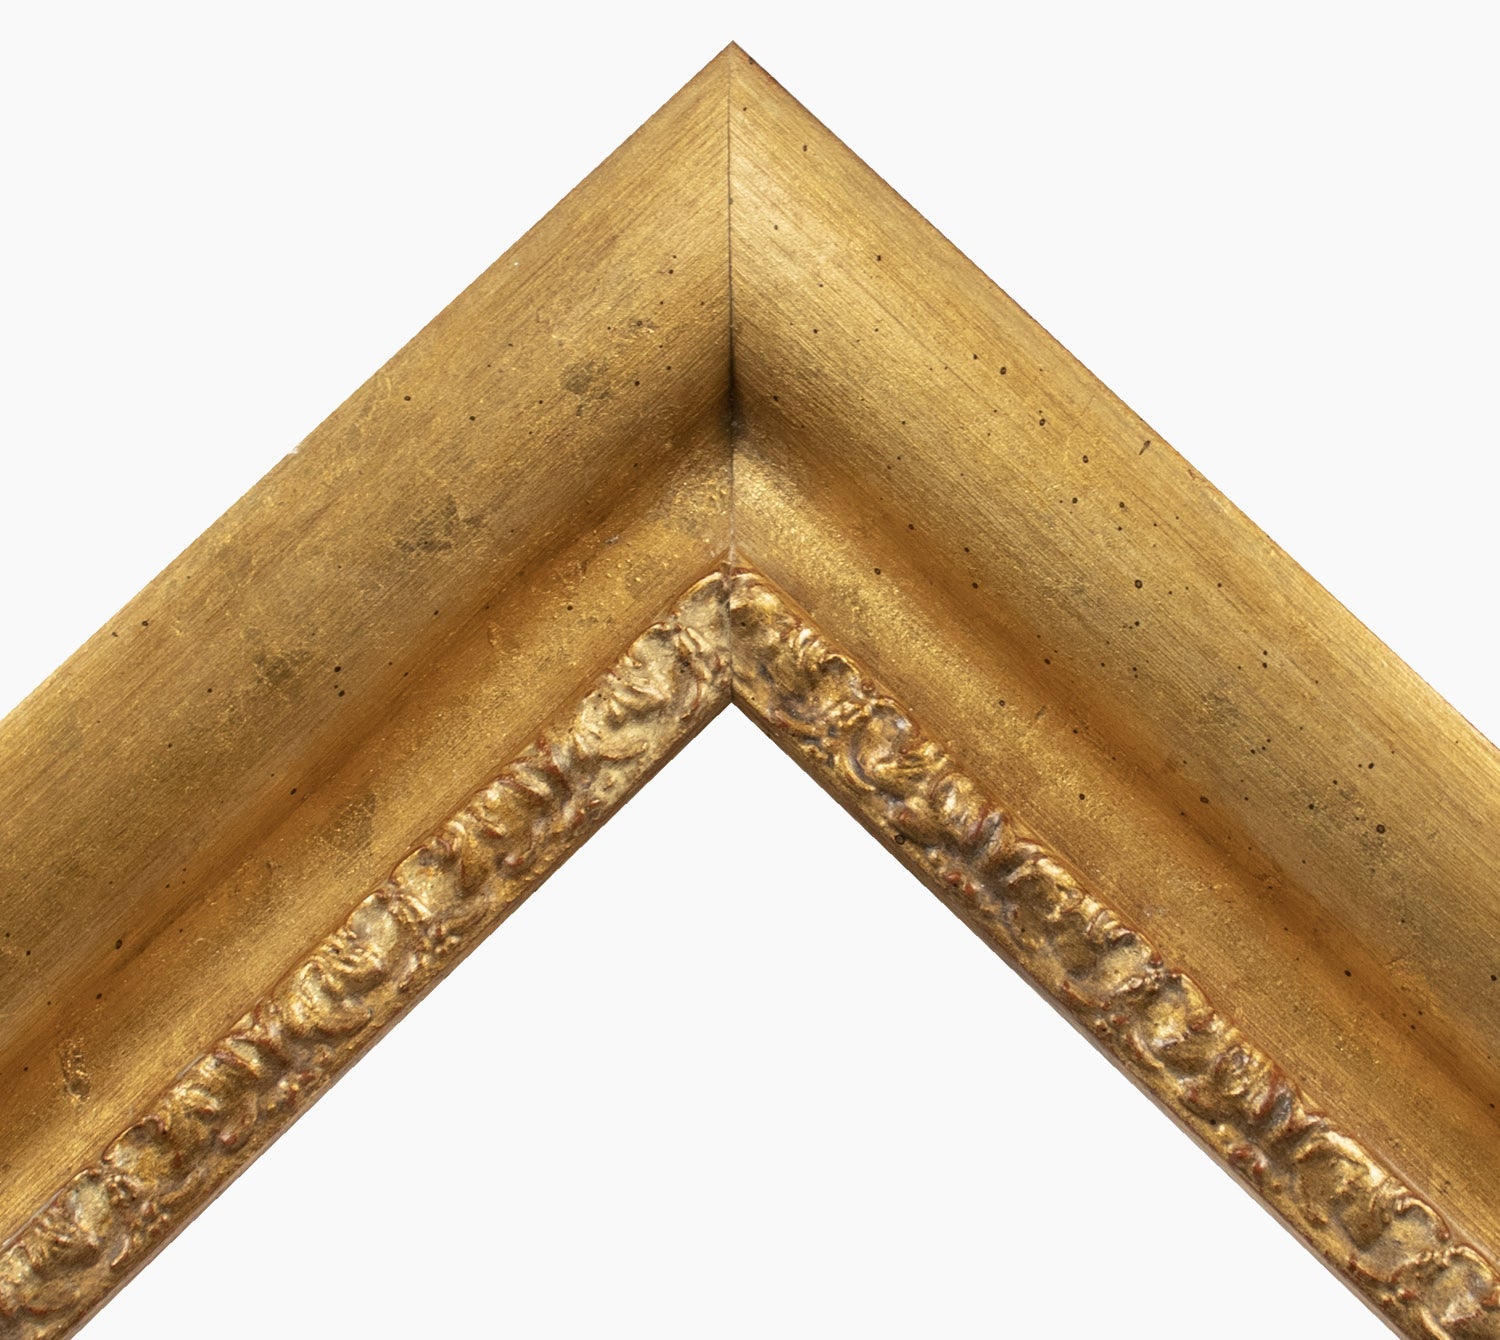 430.010 cadre en bois à la feuille d'or mesure de profil 65x55 mm Lombarda cornici S.n.c.